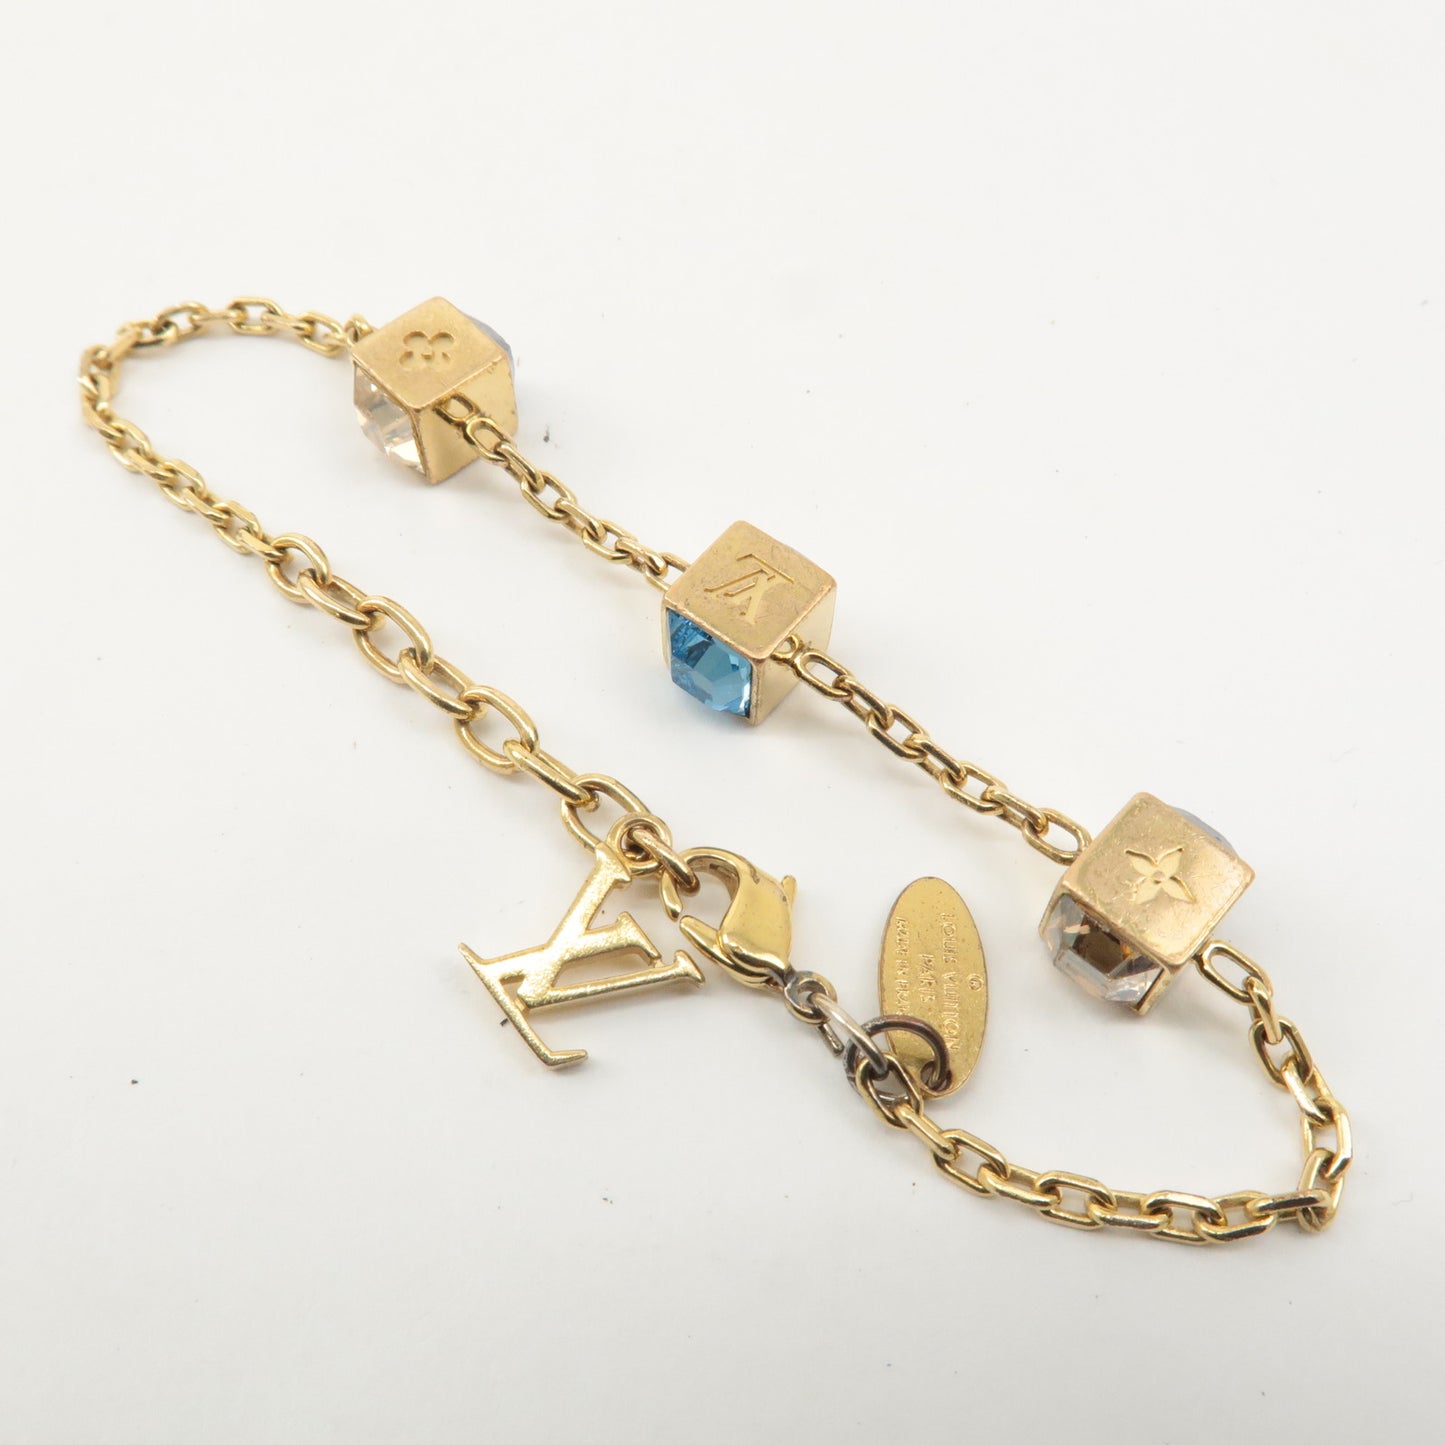 Louis Vuitton Bracelet Gambling Chain Bracelet Gold M65209